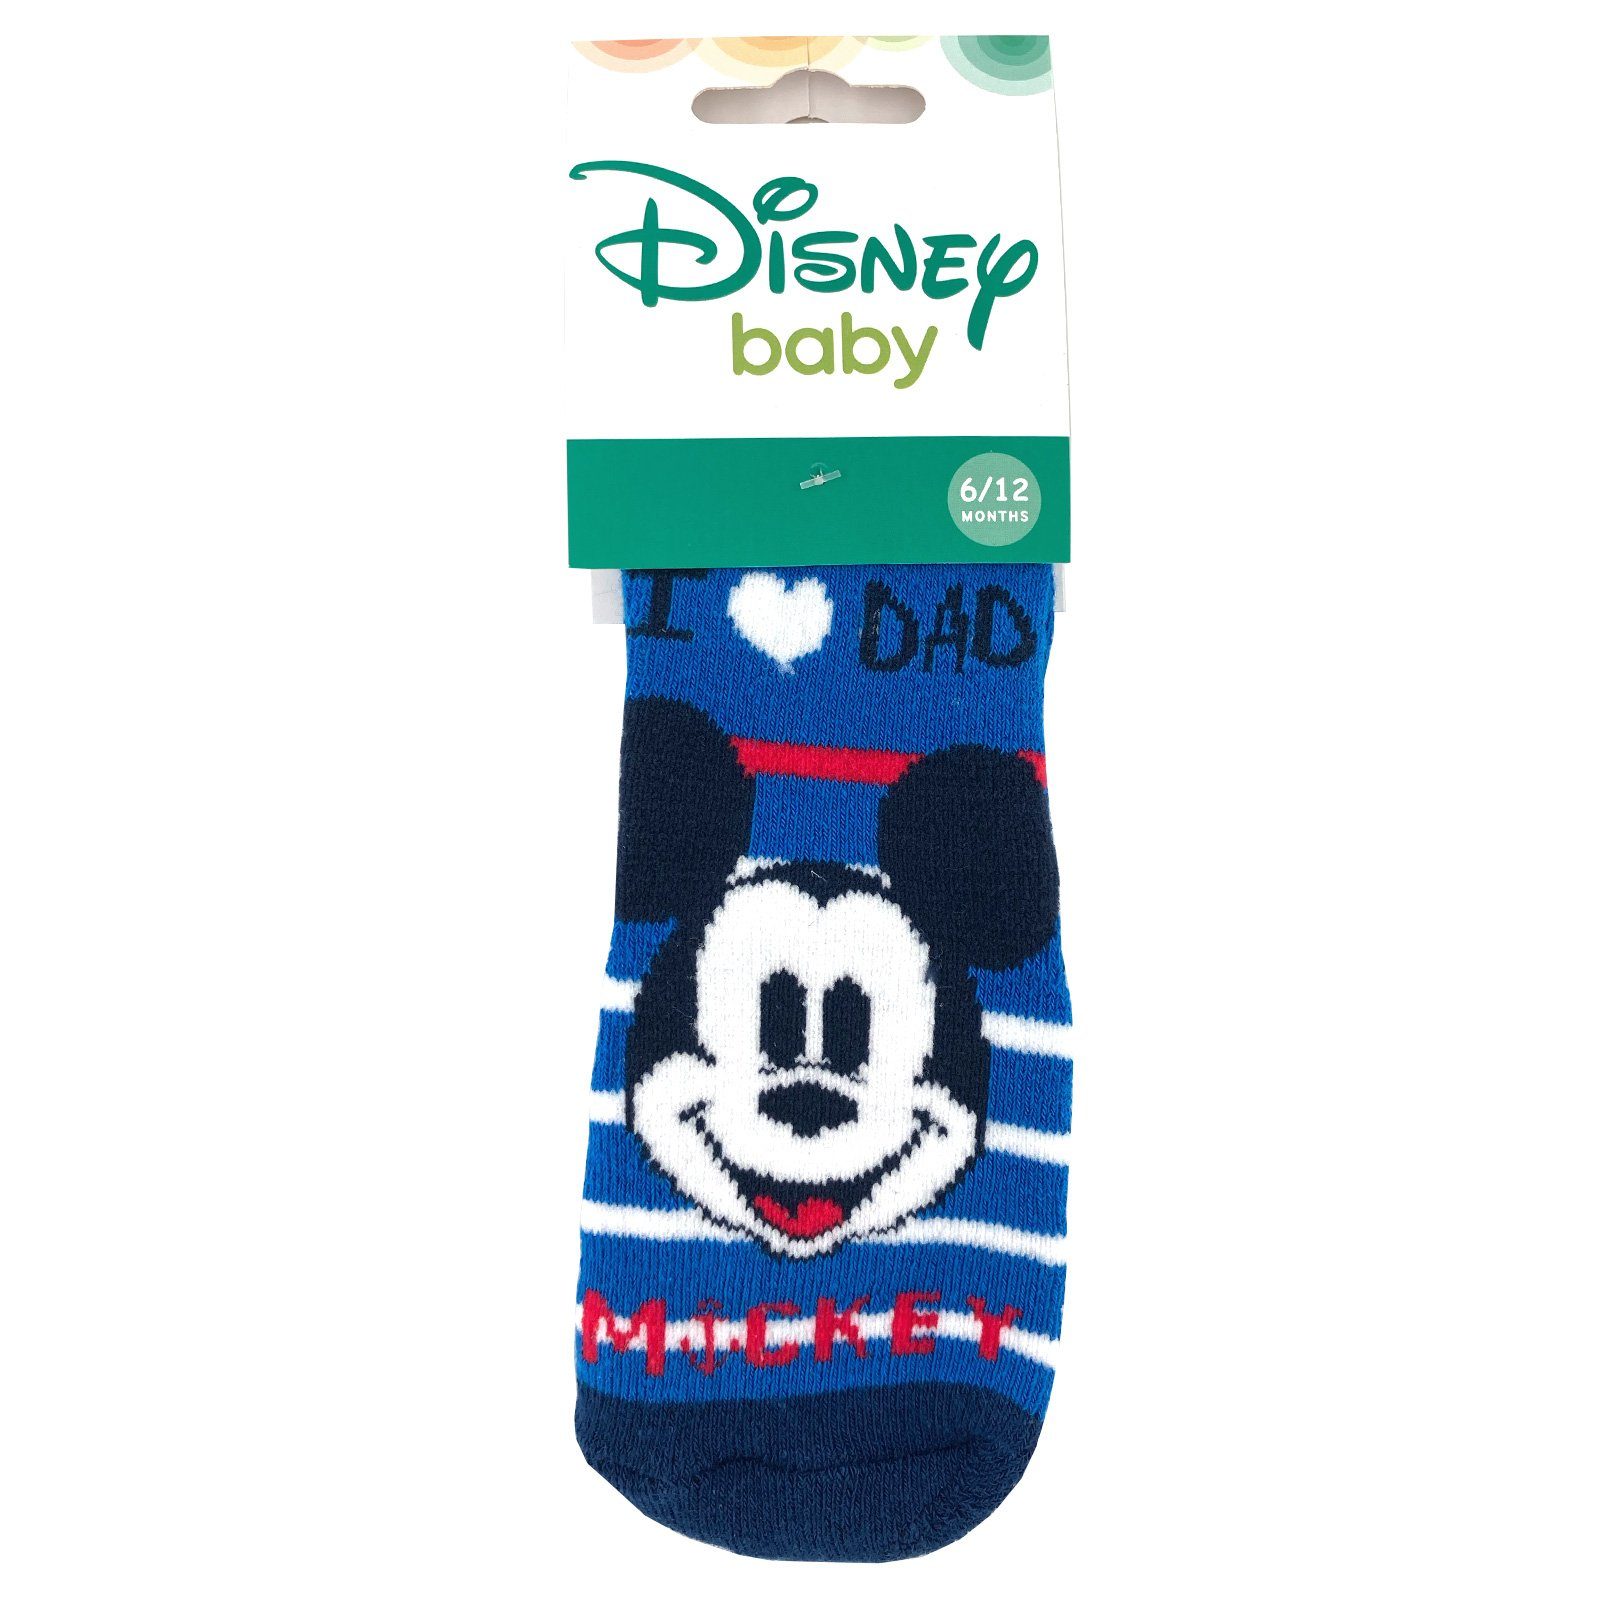 2 x Baby Strümpfe/Socken Disney Micky Mouse 6/12 Monate*Hellblau/weiß* 